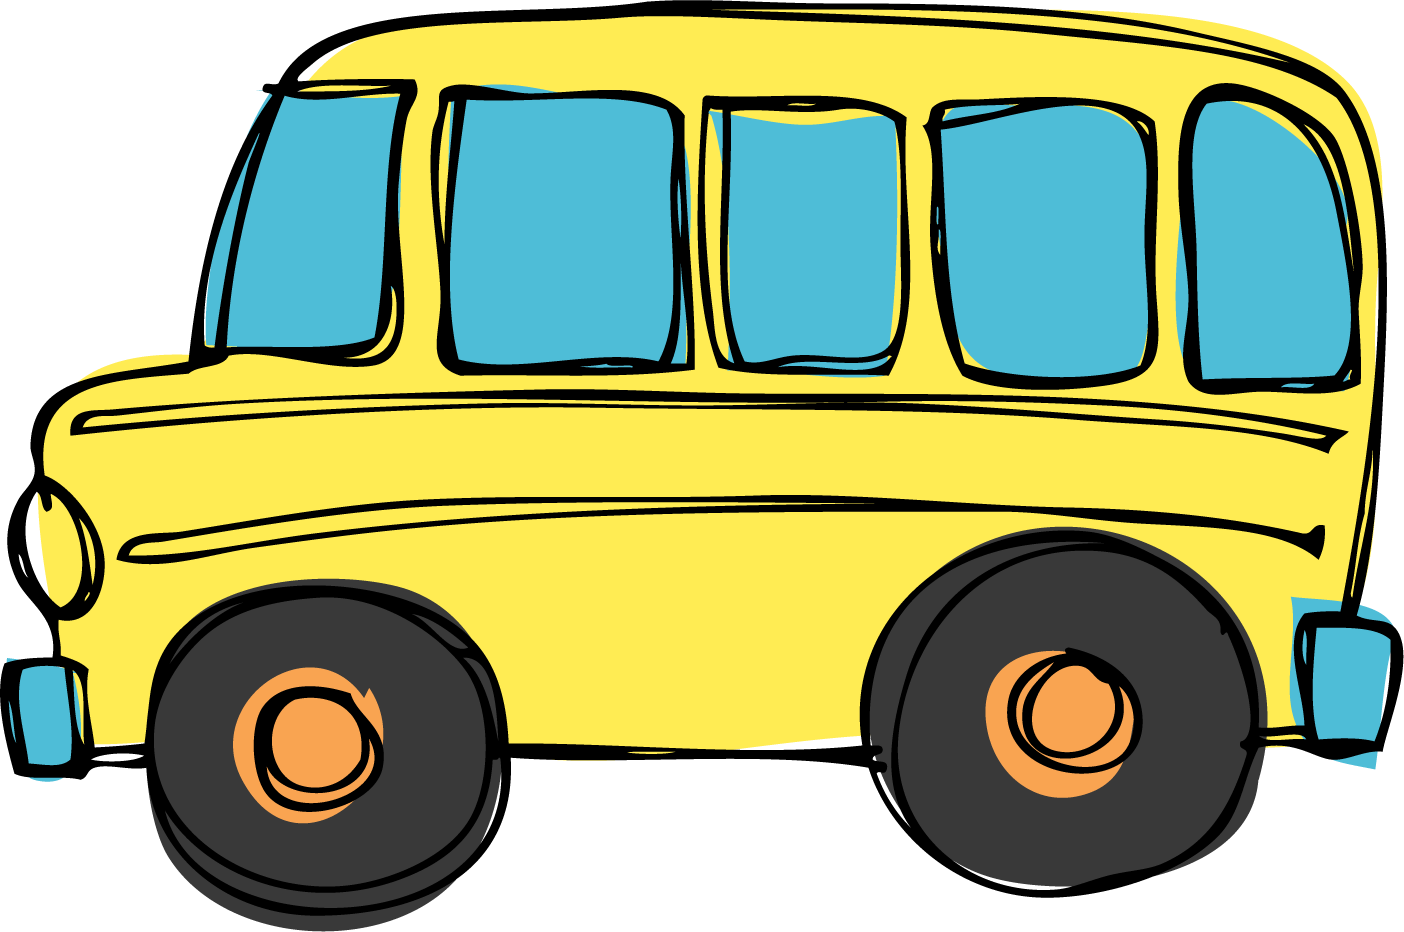 Clip art of school bus